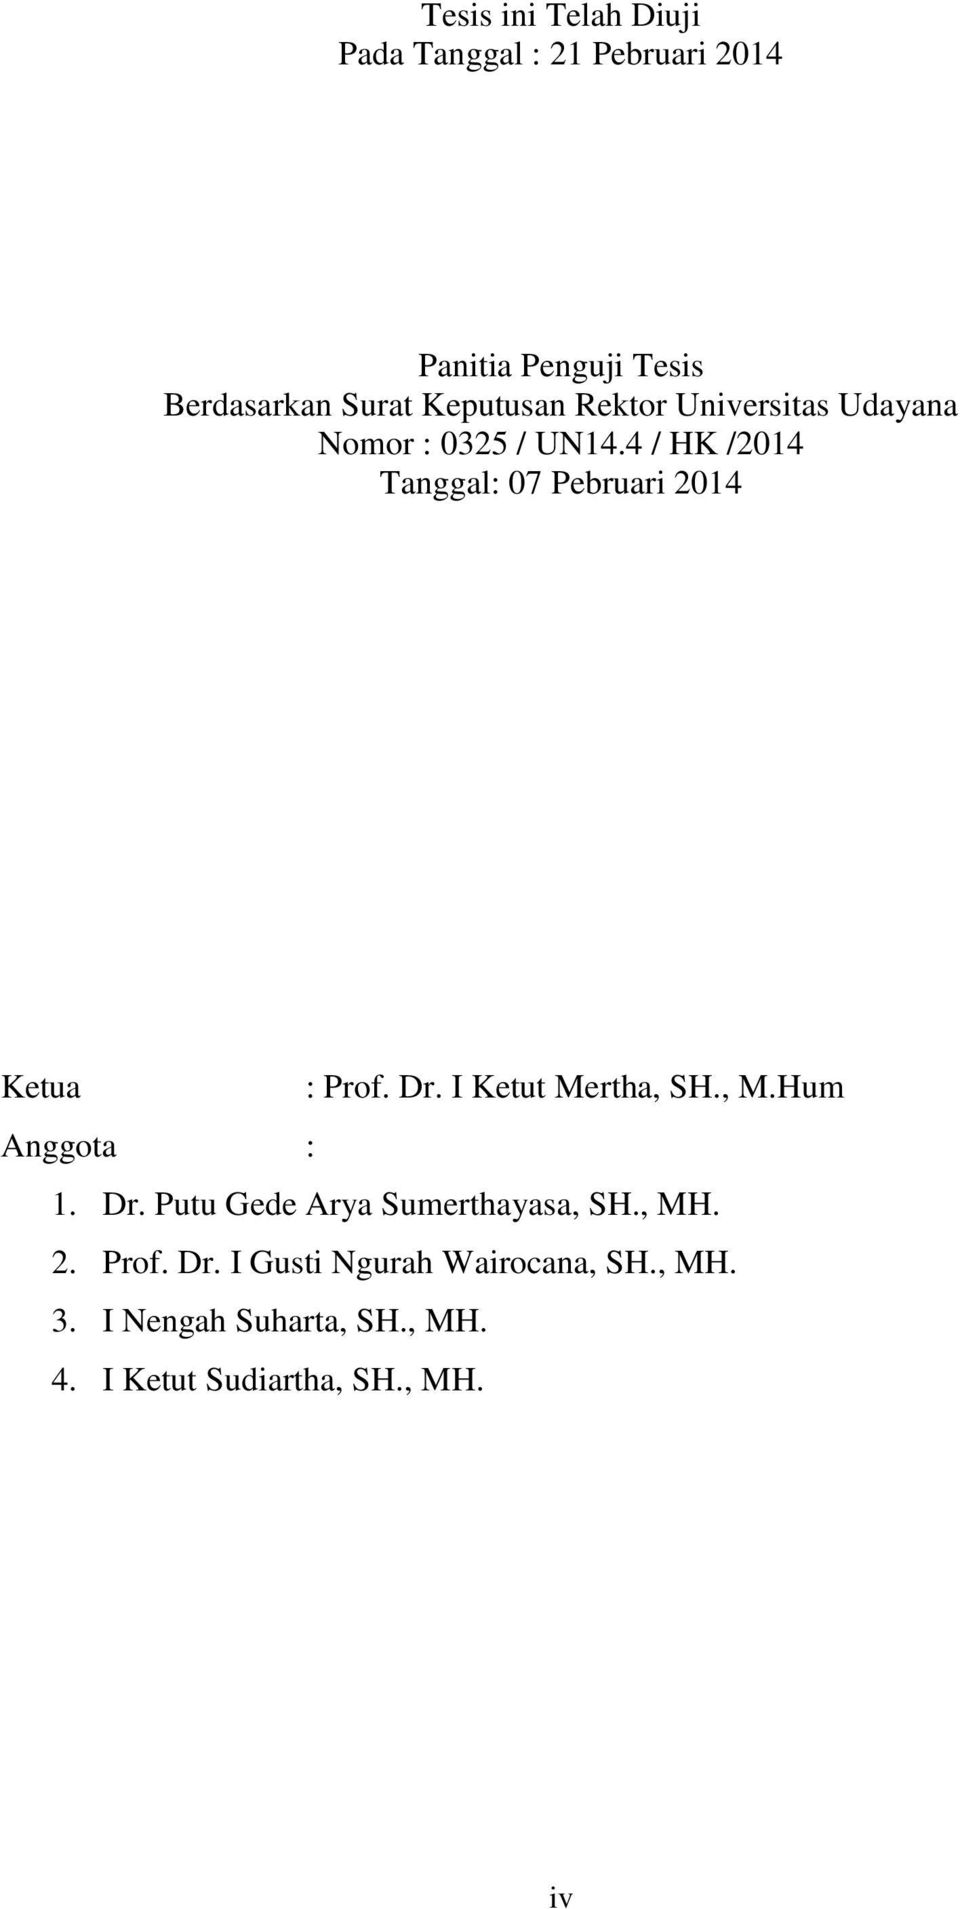 4 / HK /2014 Tanggal: 07 Pebruari 2014 Ketua : Prof. Dr. I Ketut Mertha, SH., M.Hum Anggota : 1. Dr. Putu Gede Arya Sumerthayasa, SH.